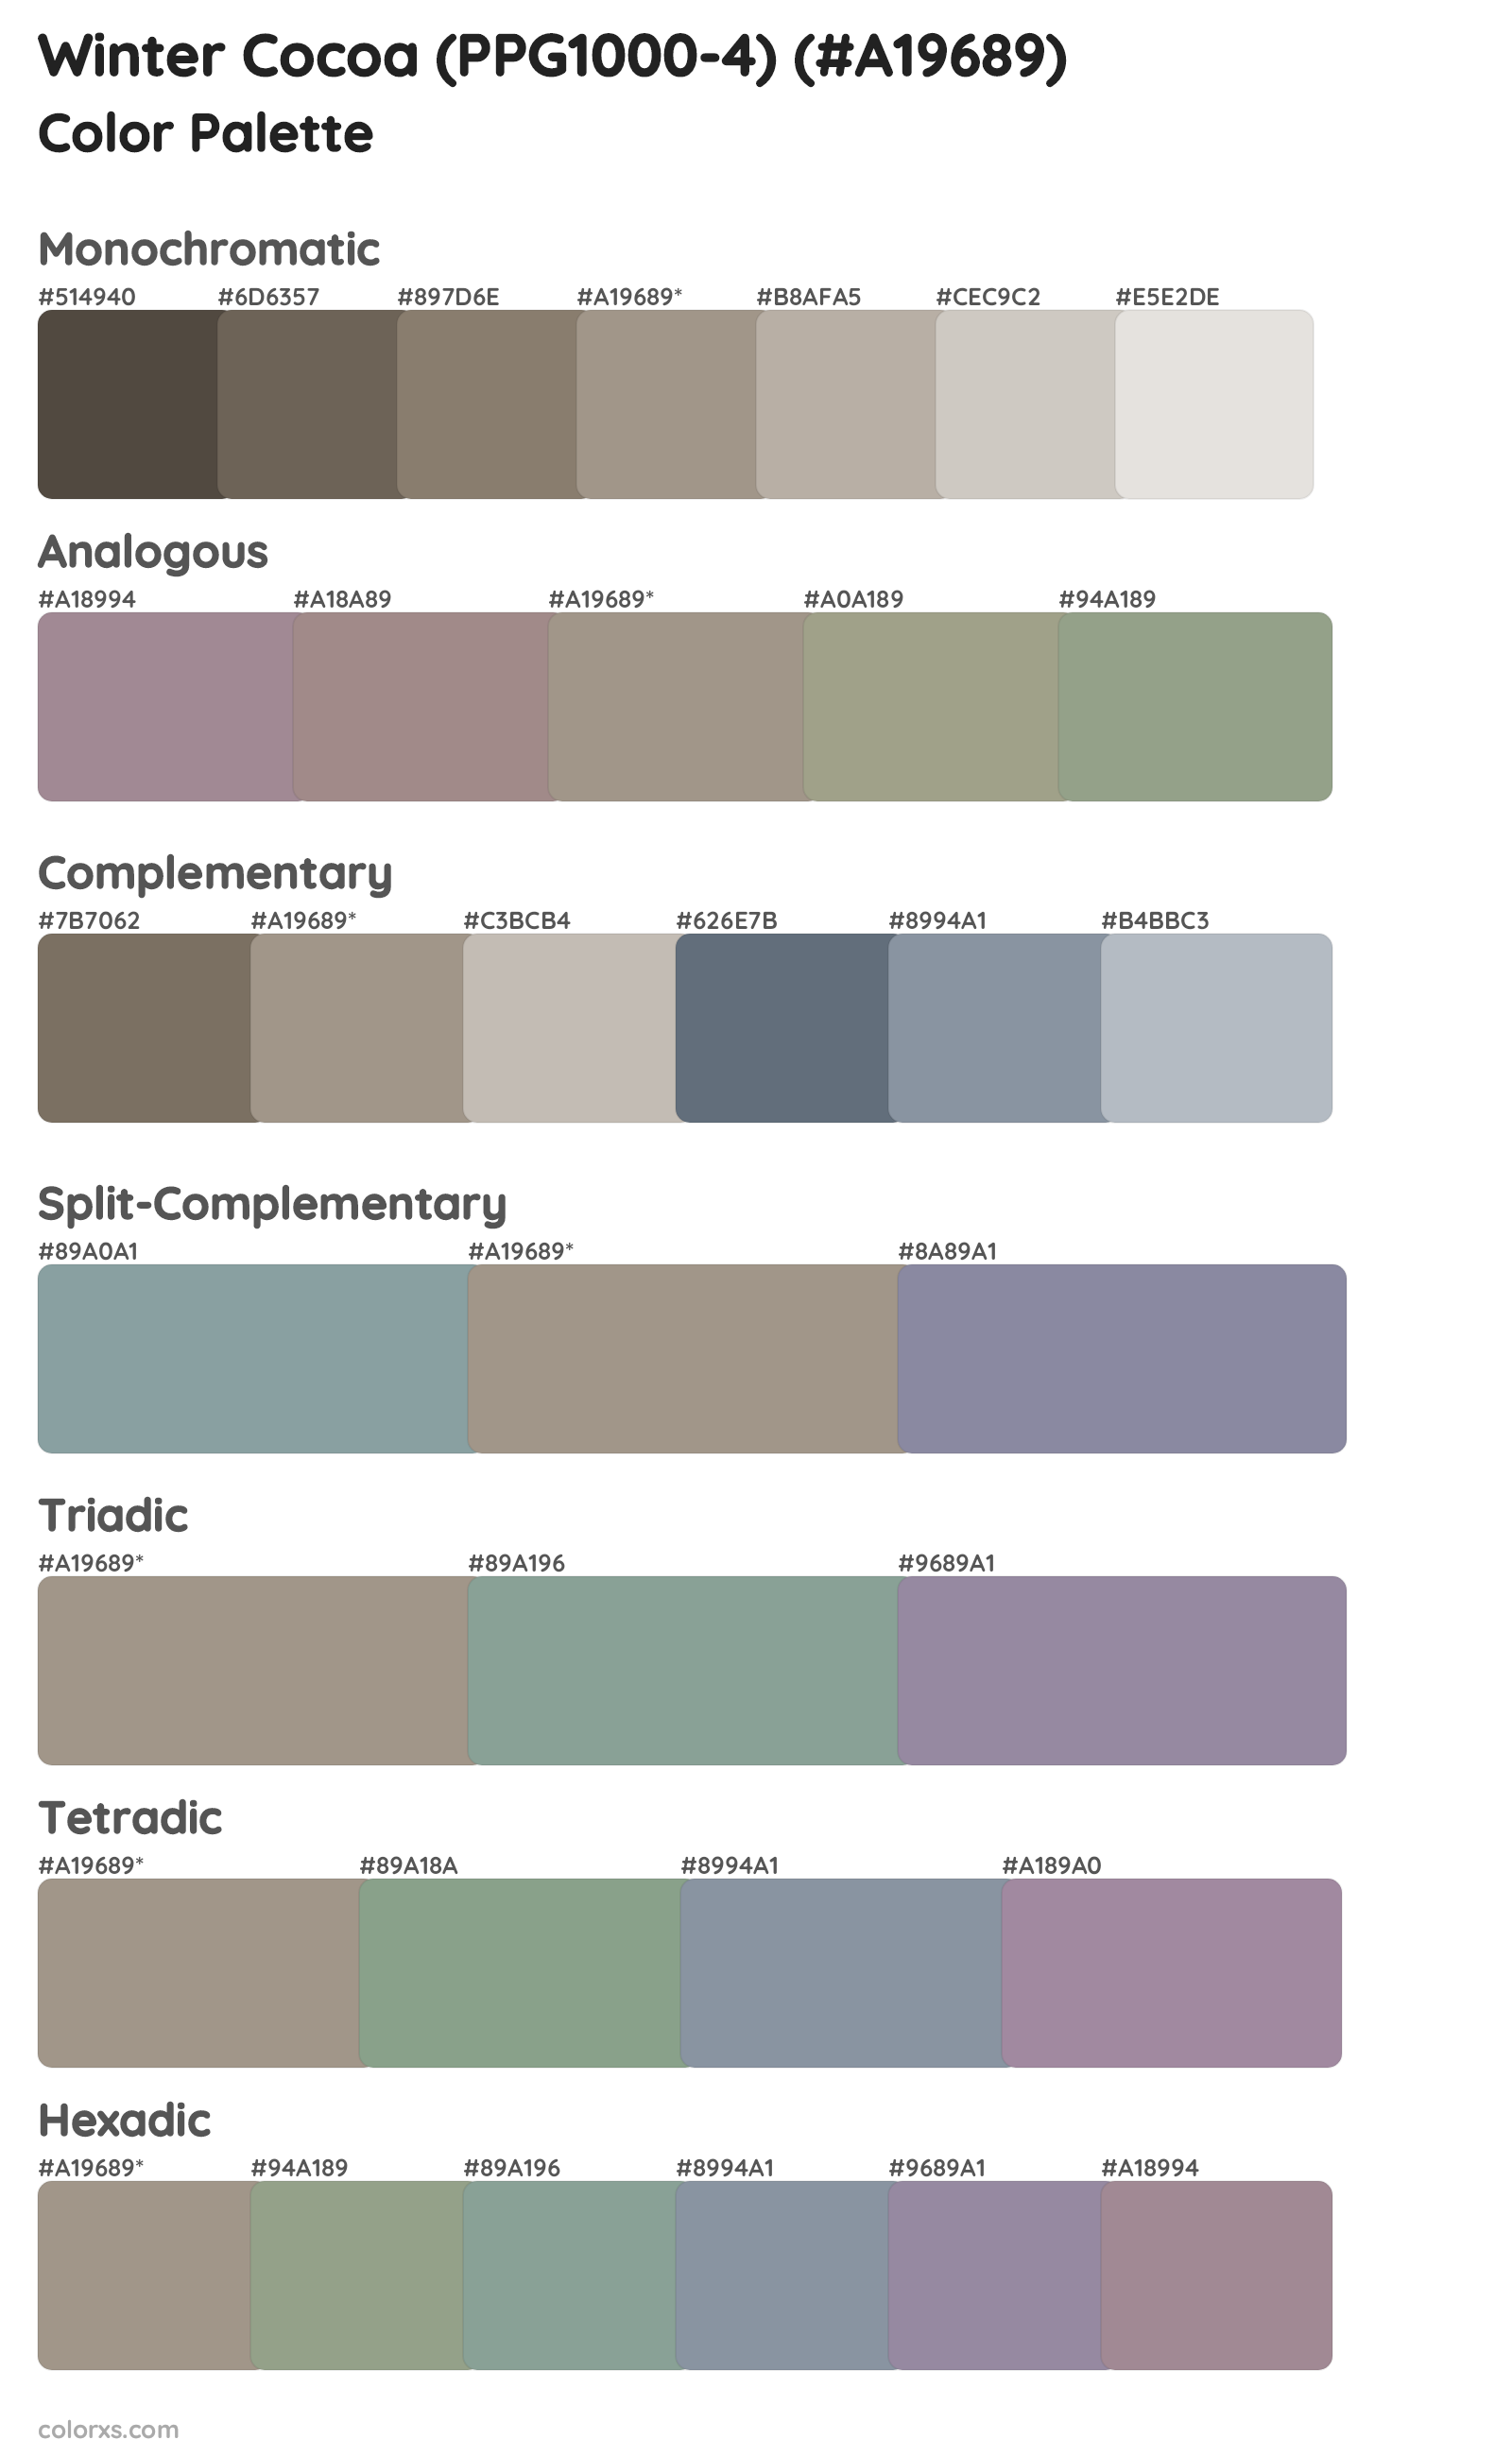 Winter Cocoa (PPG1000-4) Color Scheme Palettes